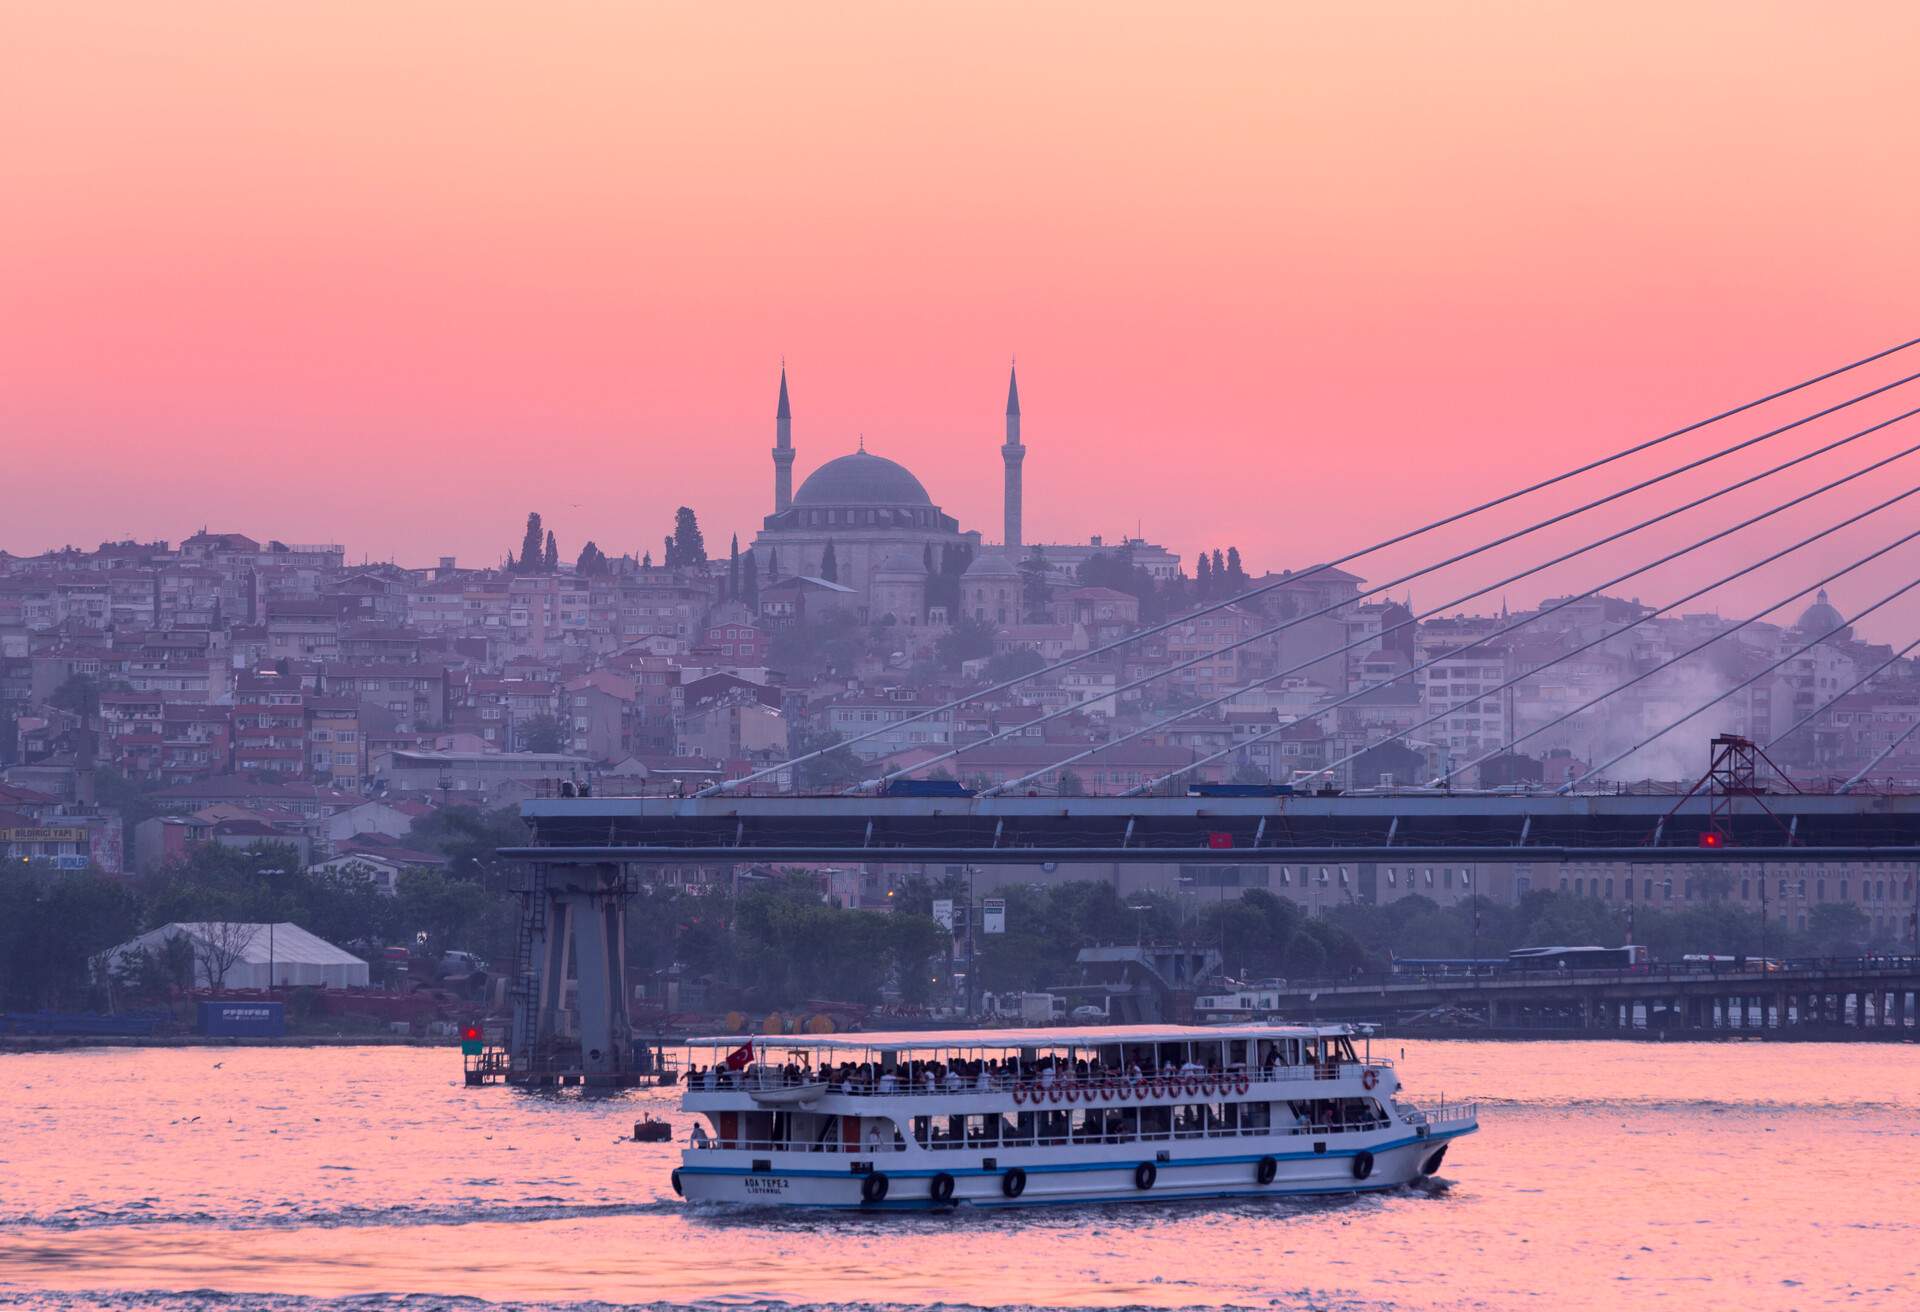 View at sunset over the Bosphorus Strait from Galata Bridge.